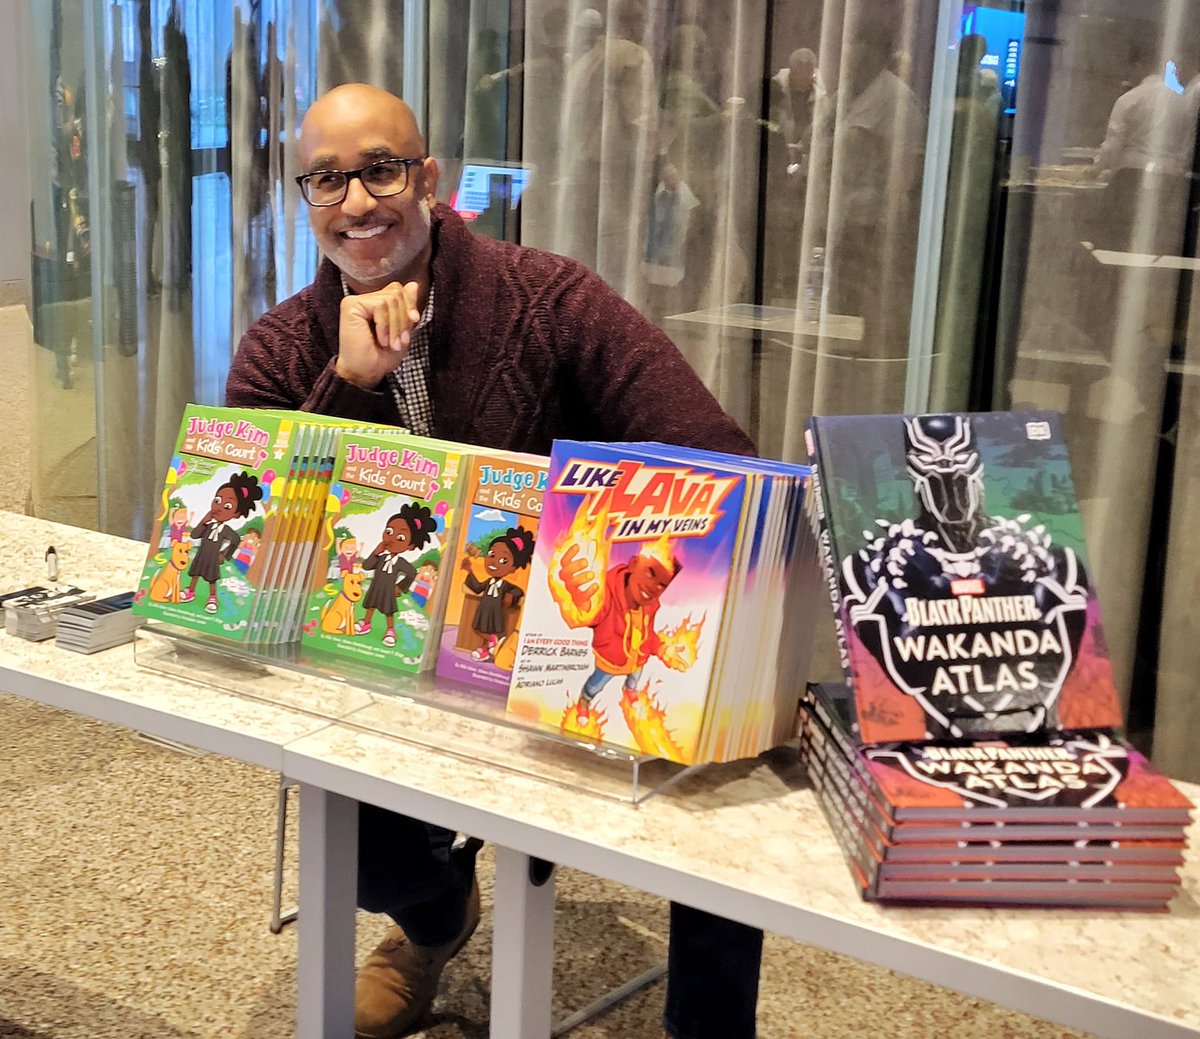 #SerendipityLit illustrator, Shawn Martinbrough participated in an event for the Smithsonian African American Museum!

#LikeLavaInMyVeins #JudgeKim #BlackBooks #BlackArt @smartinbrough @NMAAHC